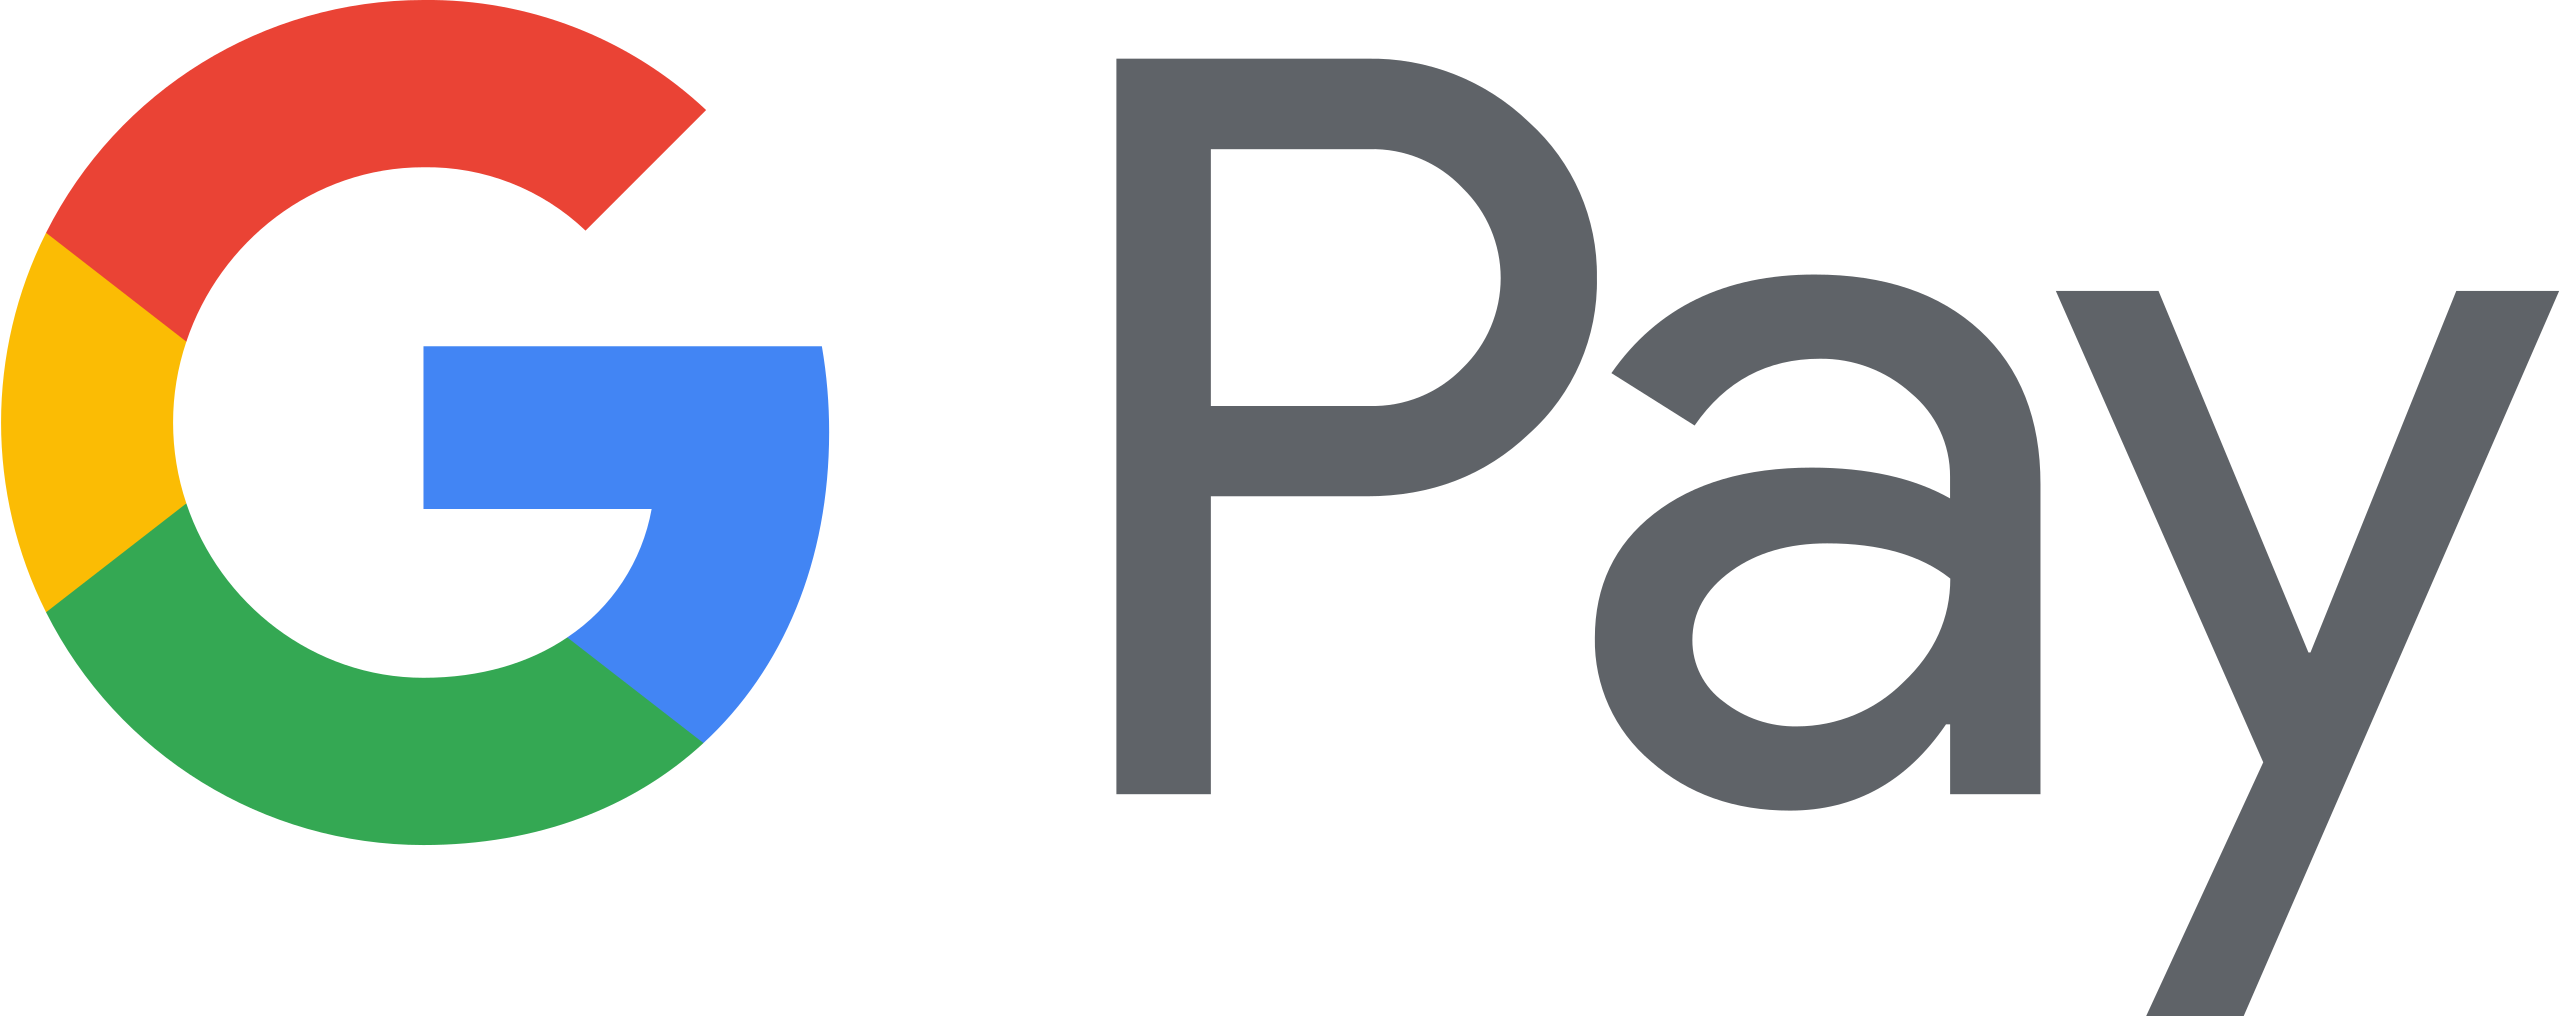 Google Pay logo png